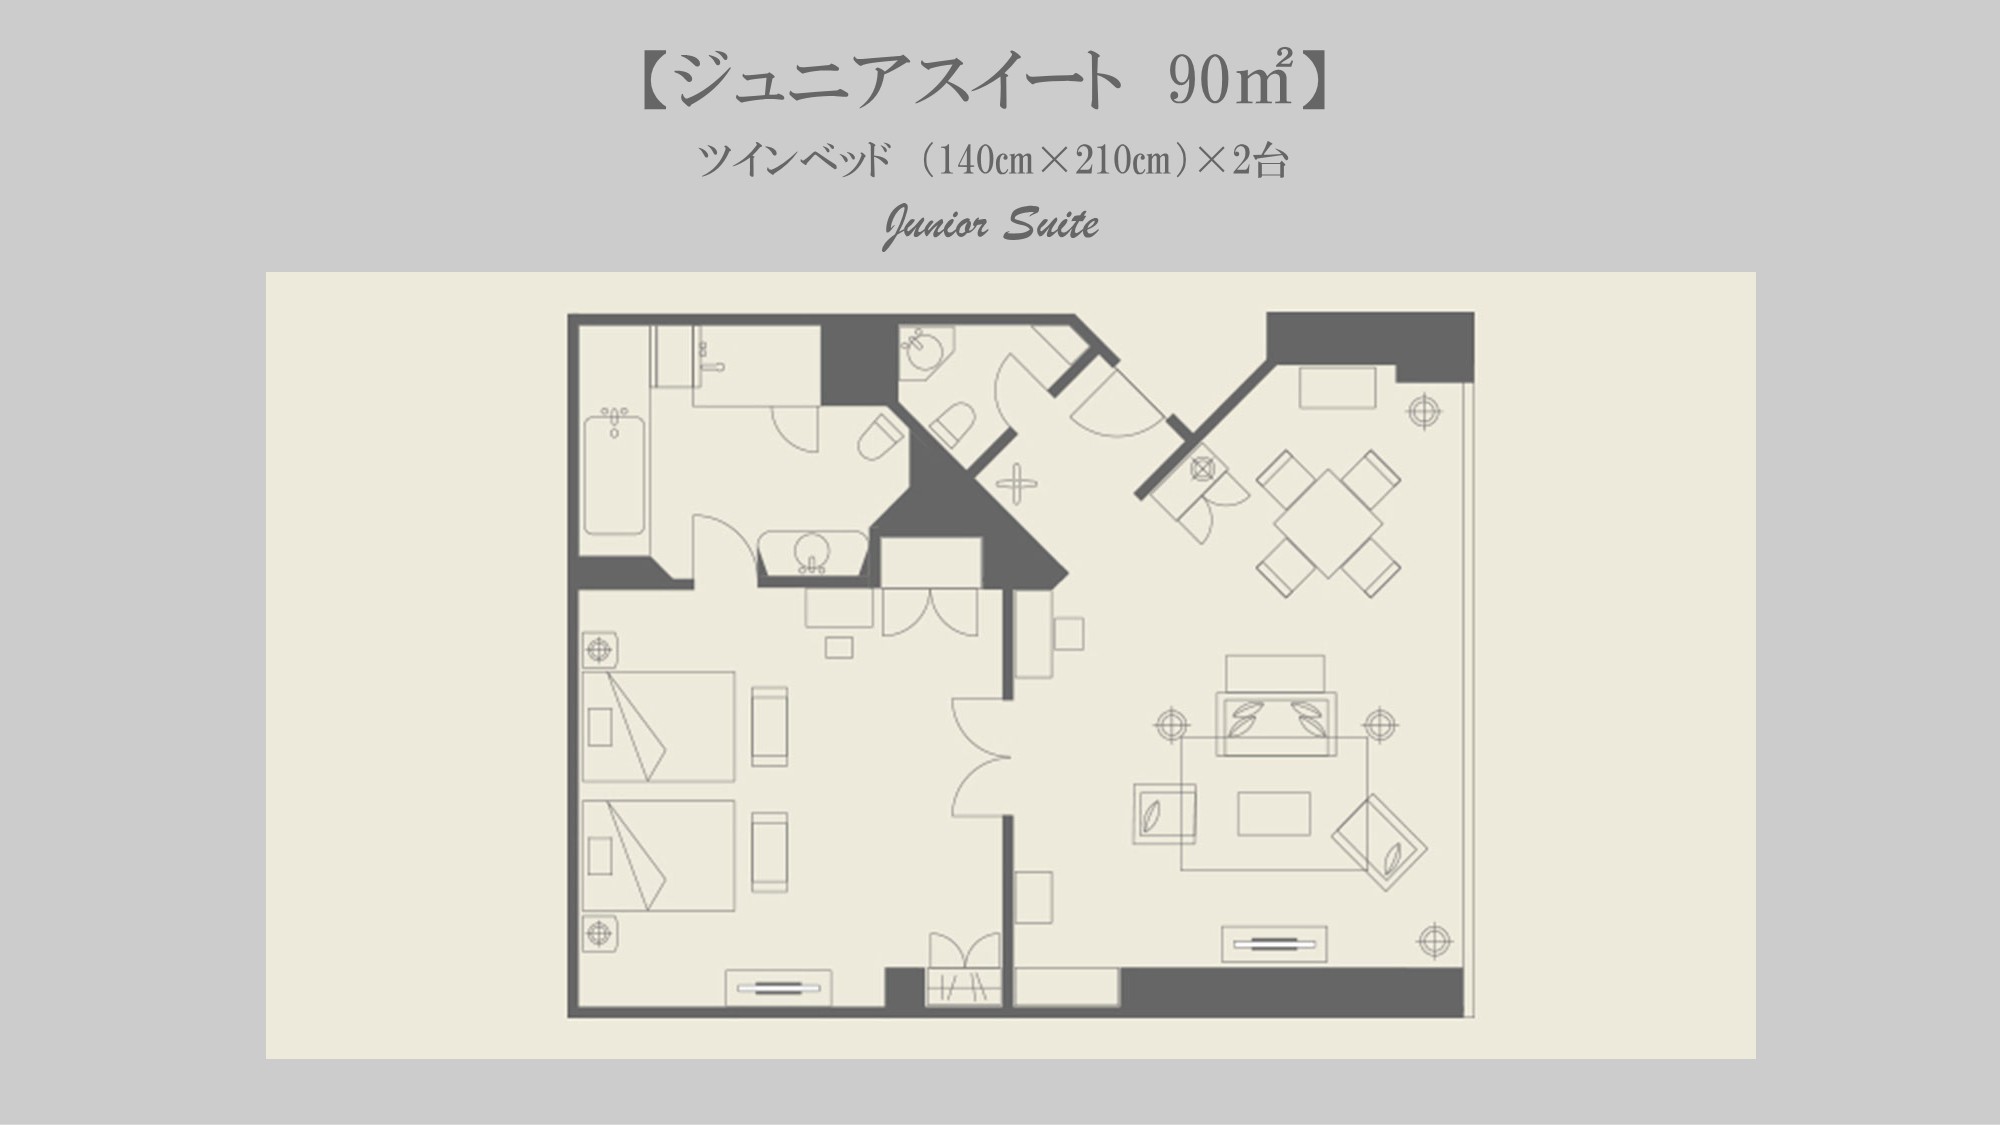 Junior Suite Twin｜91〜103平米｜ダブルベッド2台幅140×;210センチ